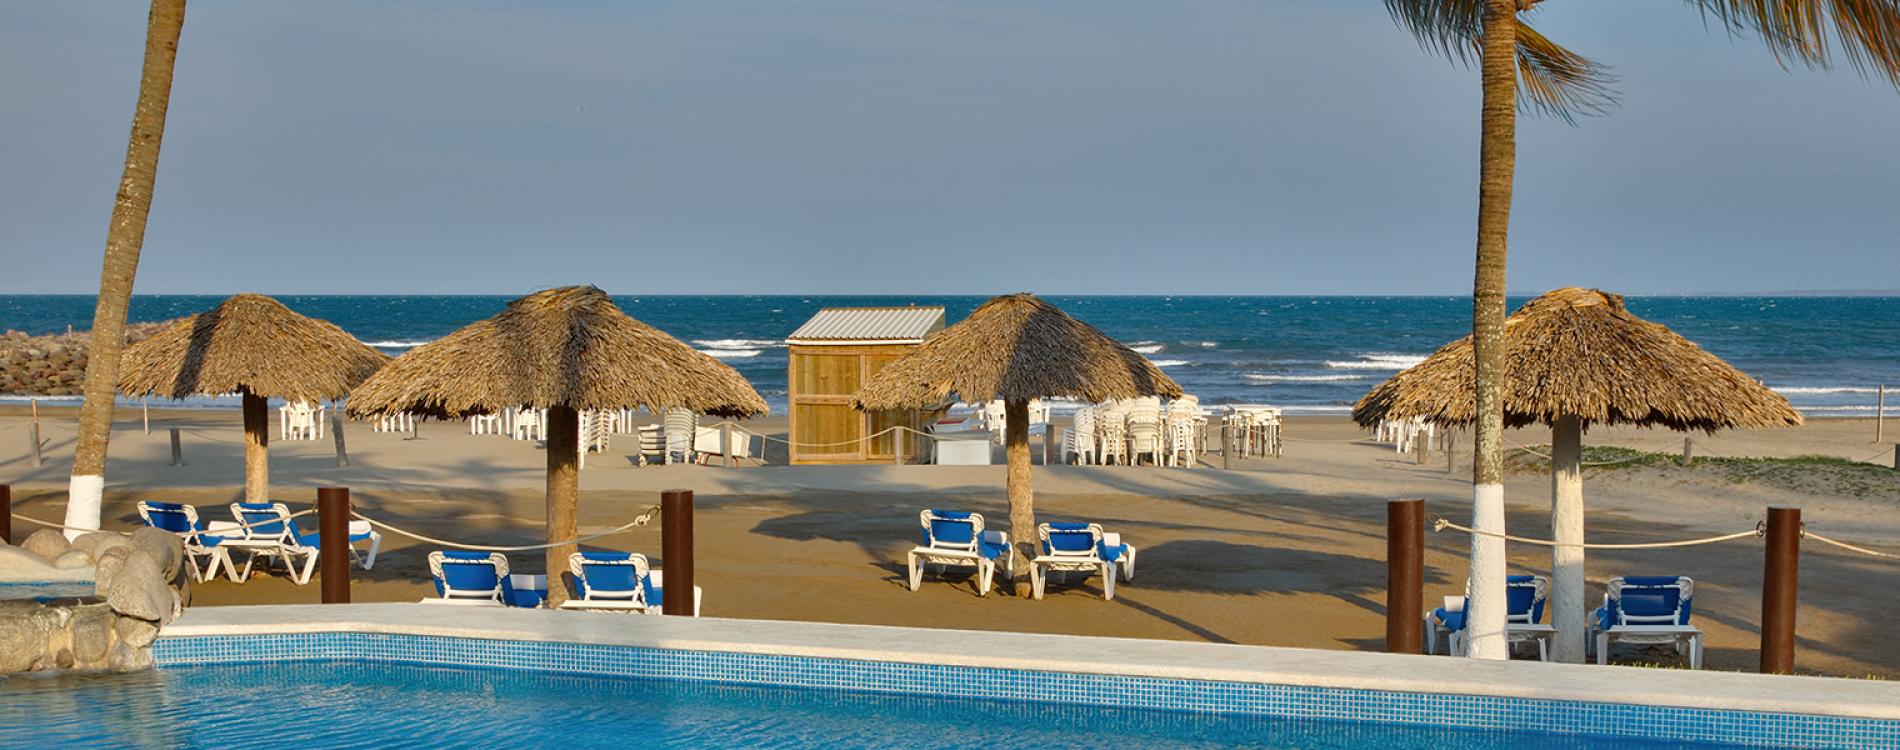 Galeria Plaza Veracruz, in Veracruz / Boca del Rio, Mexico - Preferred  Hotels & Resorts